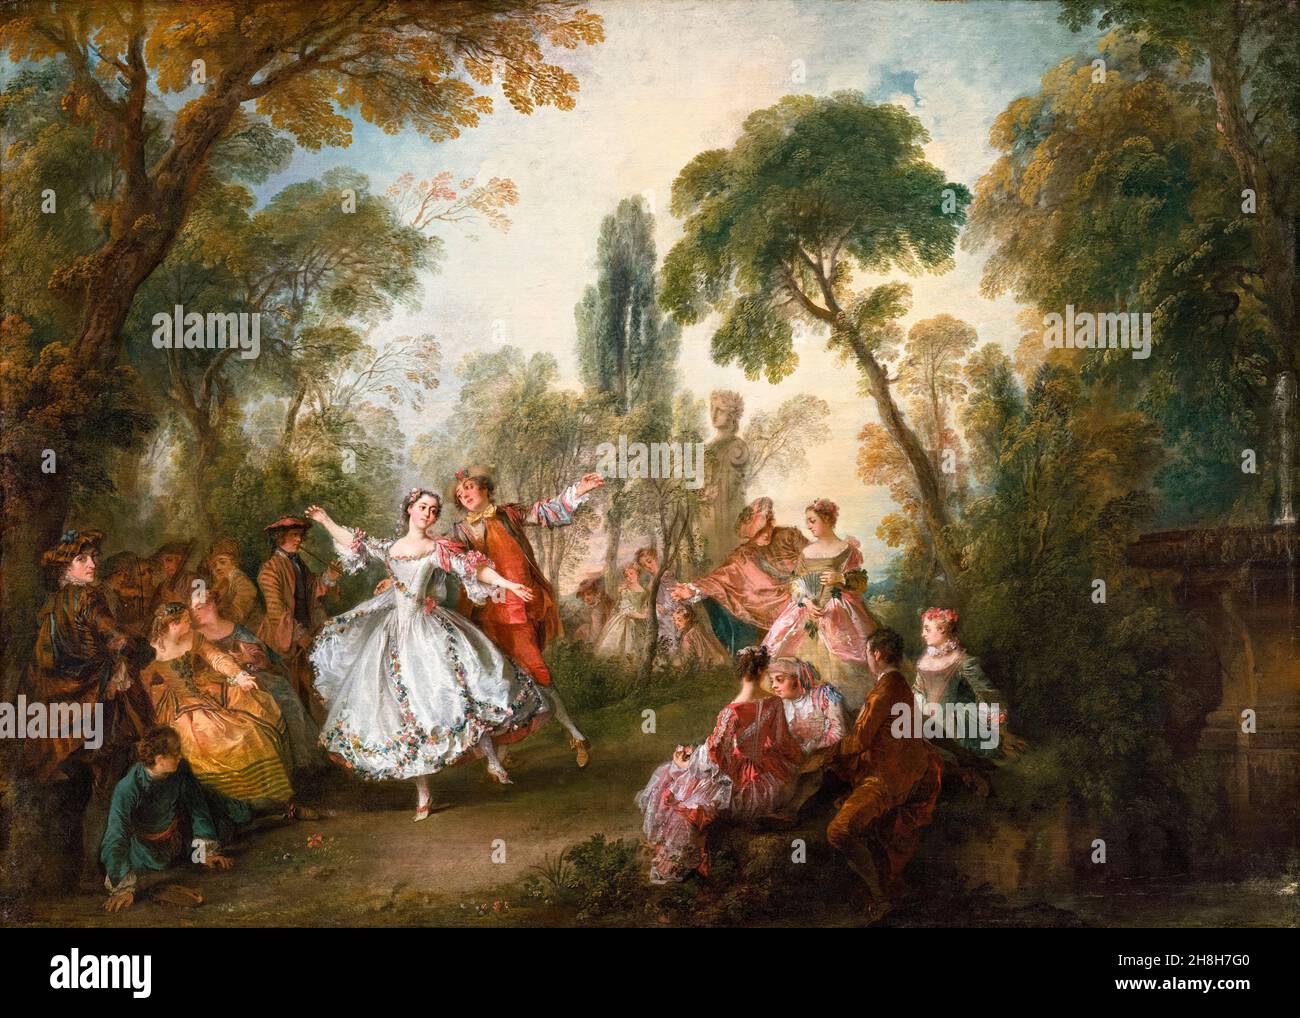 Nicolas Lancret, La Camargo Dancing, painting, circa 1730 Stock Photo